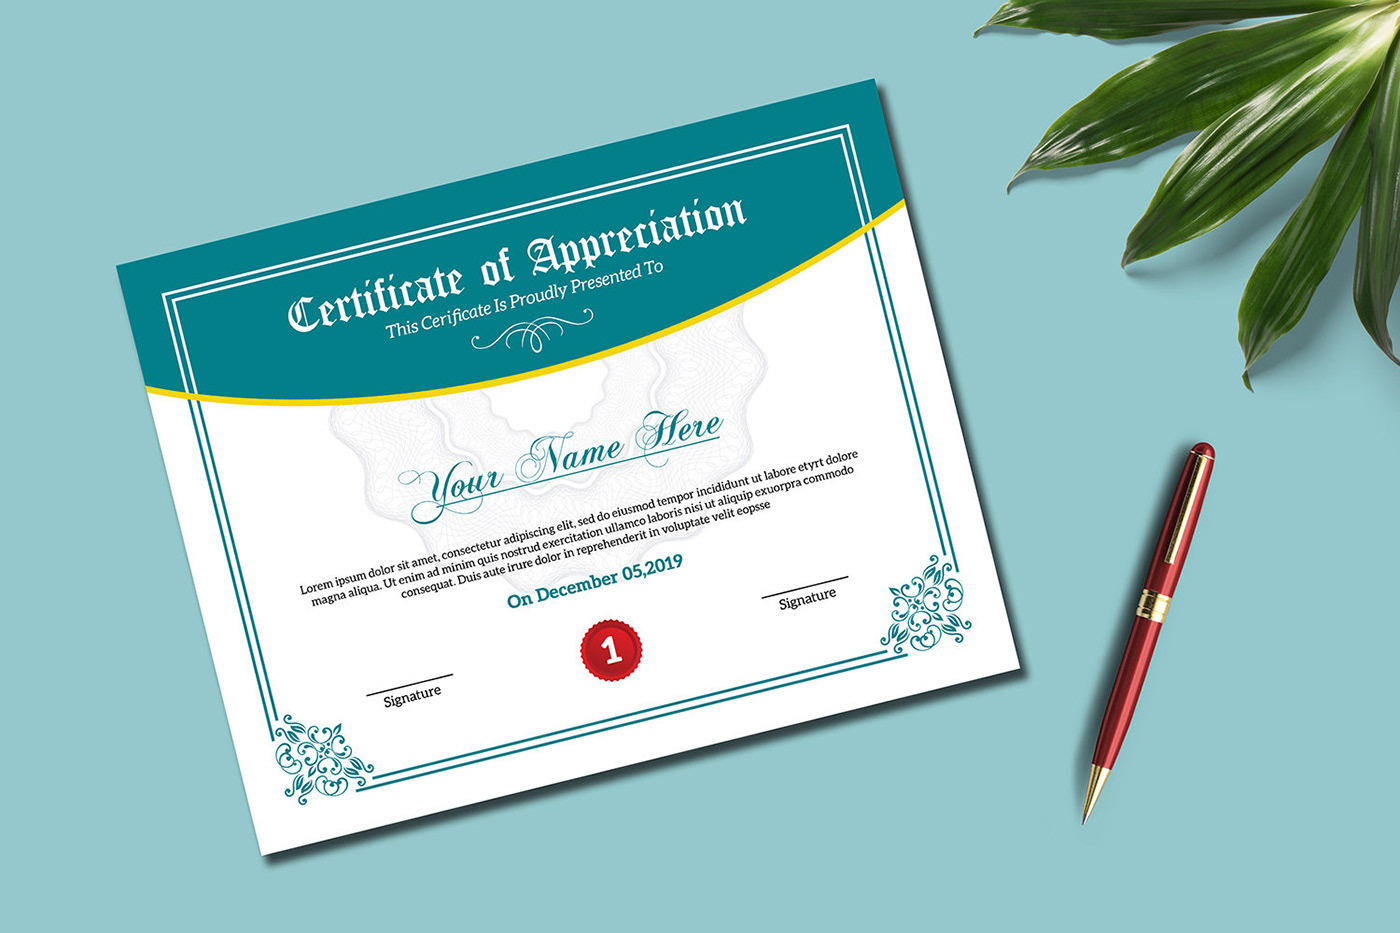 certificate template certificate school certificate College Certificate corporate certificate company certificate award Appreciation photoshop template ms word